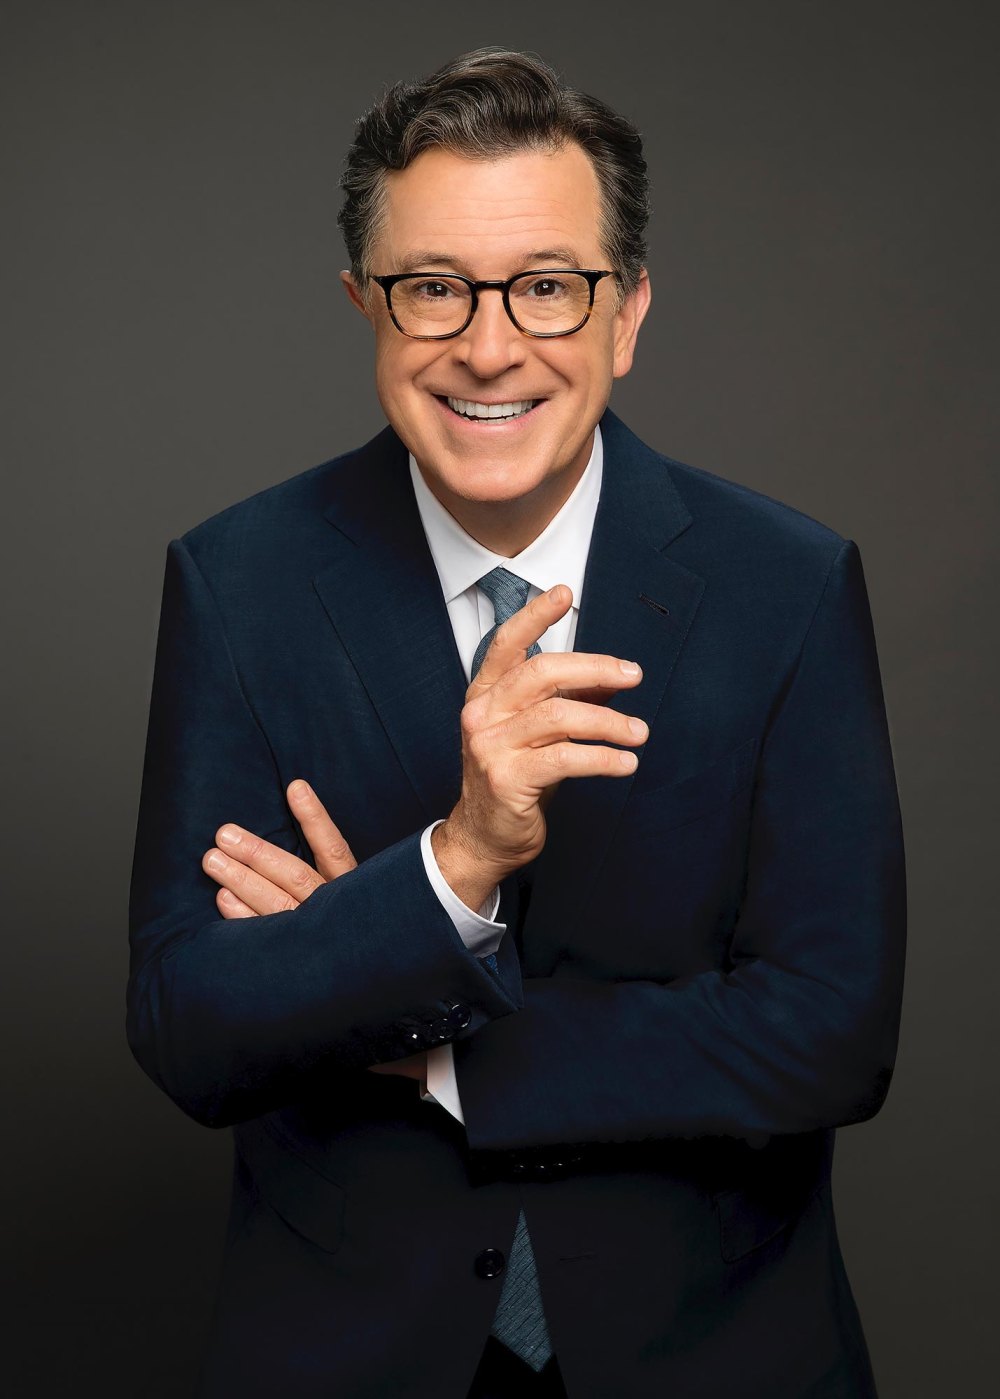 Stephen Colbert Extends His Late Show Hiatus After Appendix Surgery 2